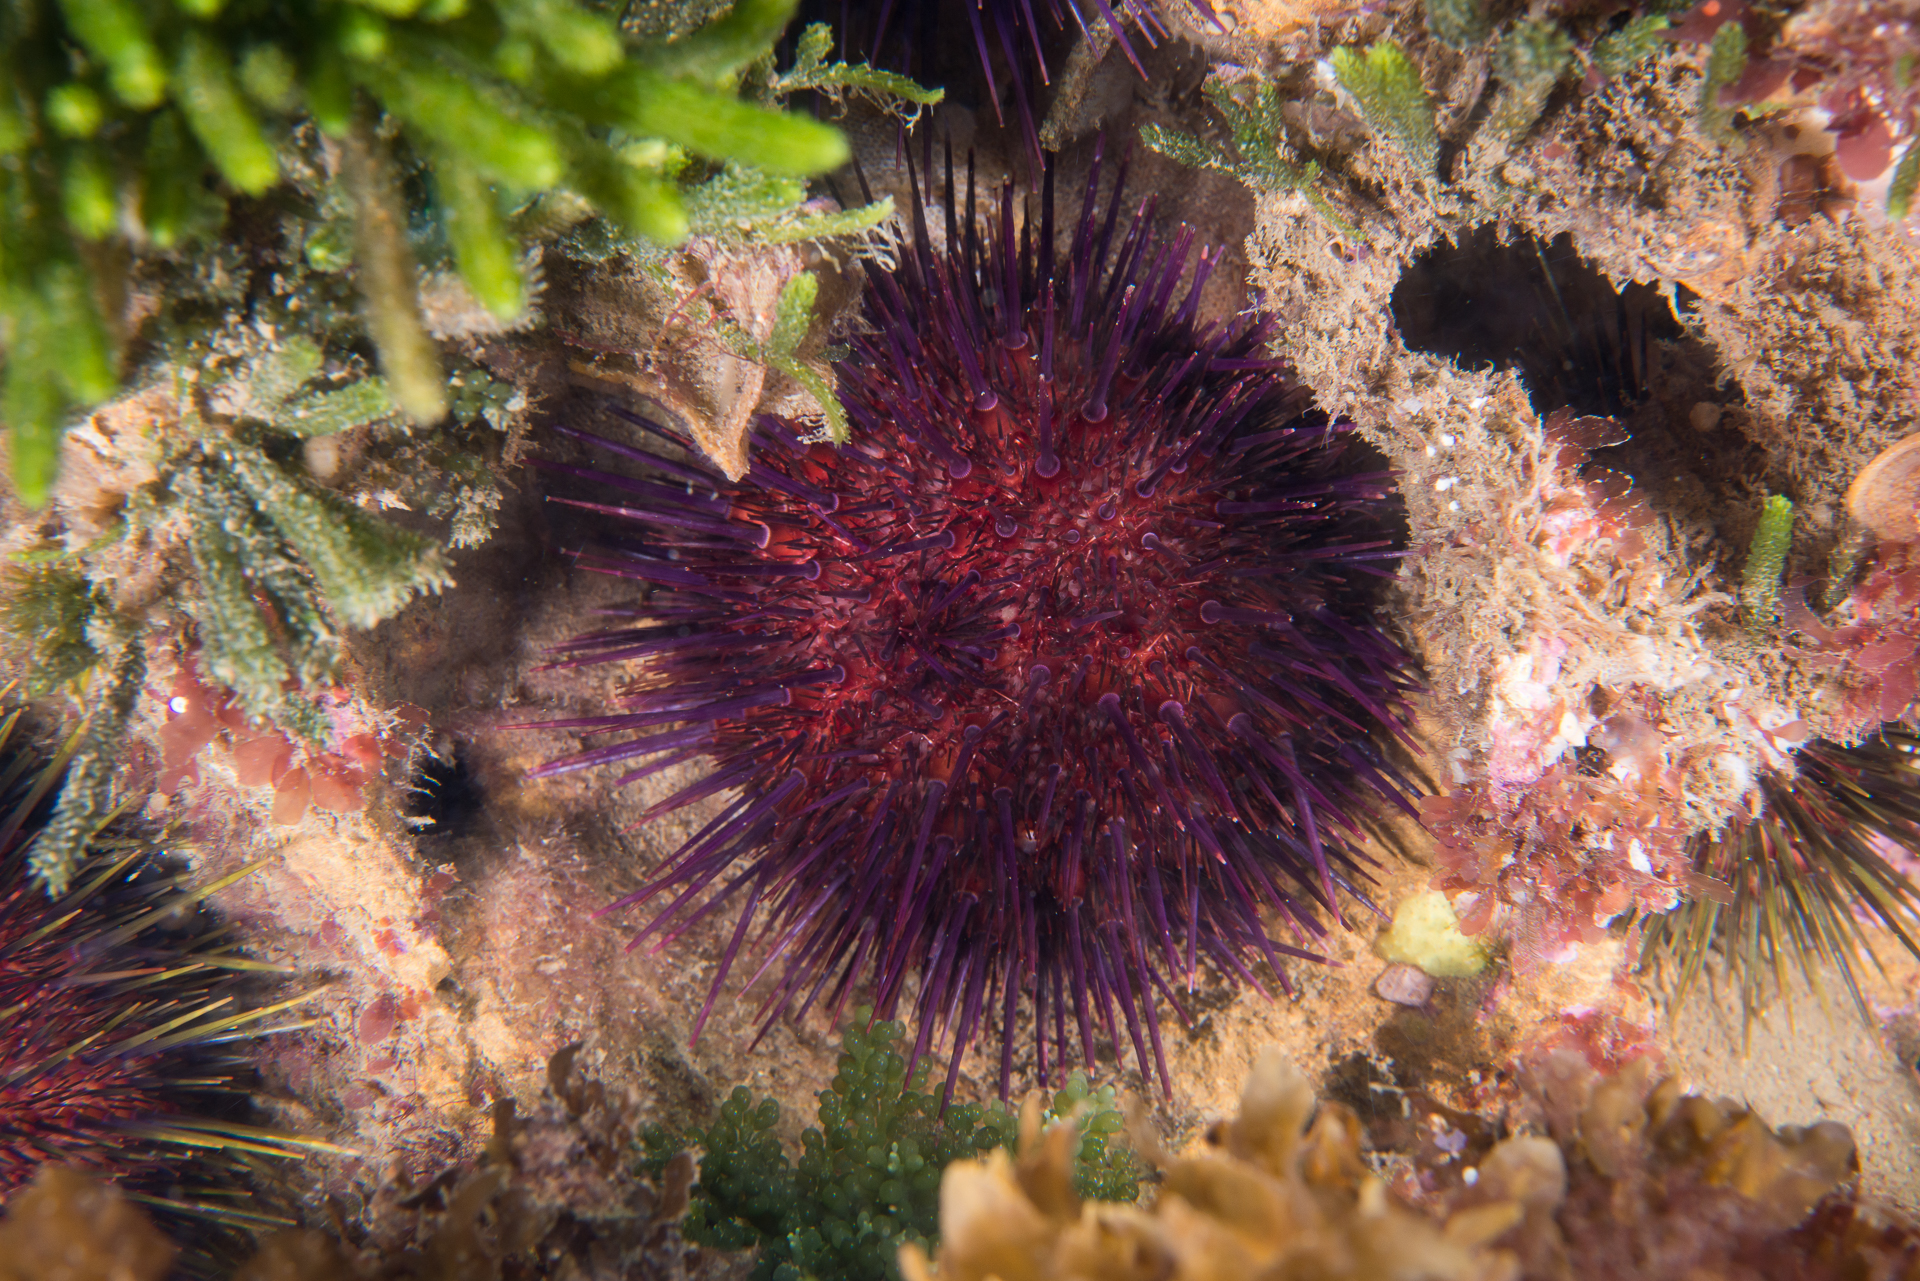 Heliocidaris erythrogramma: sea urchin